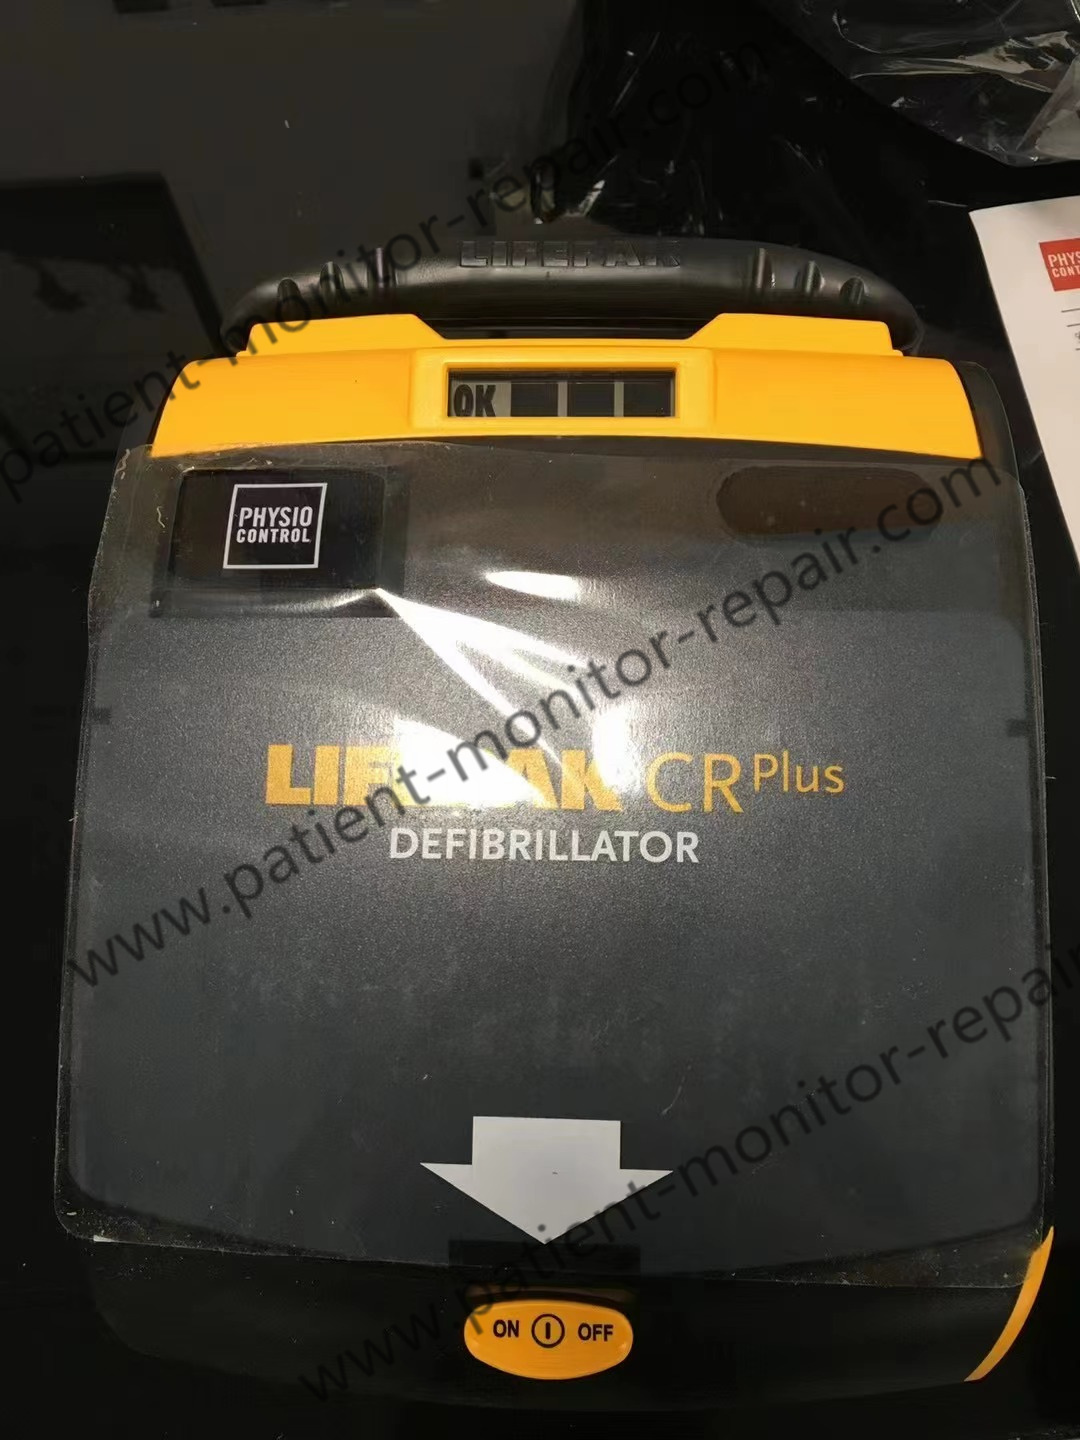 Medtronic PHYSIO CONTROL LIFEPAK CR Plus Defibrillator Used Medical Equipment 